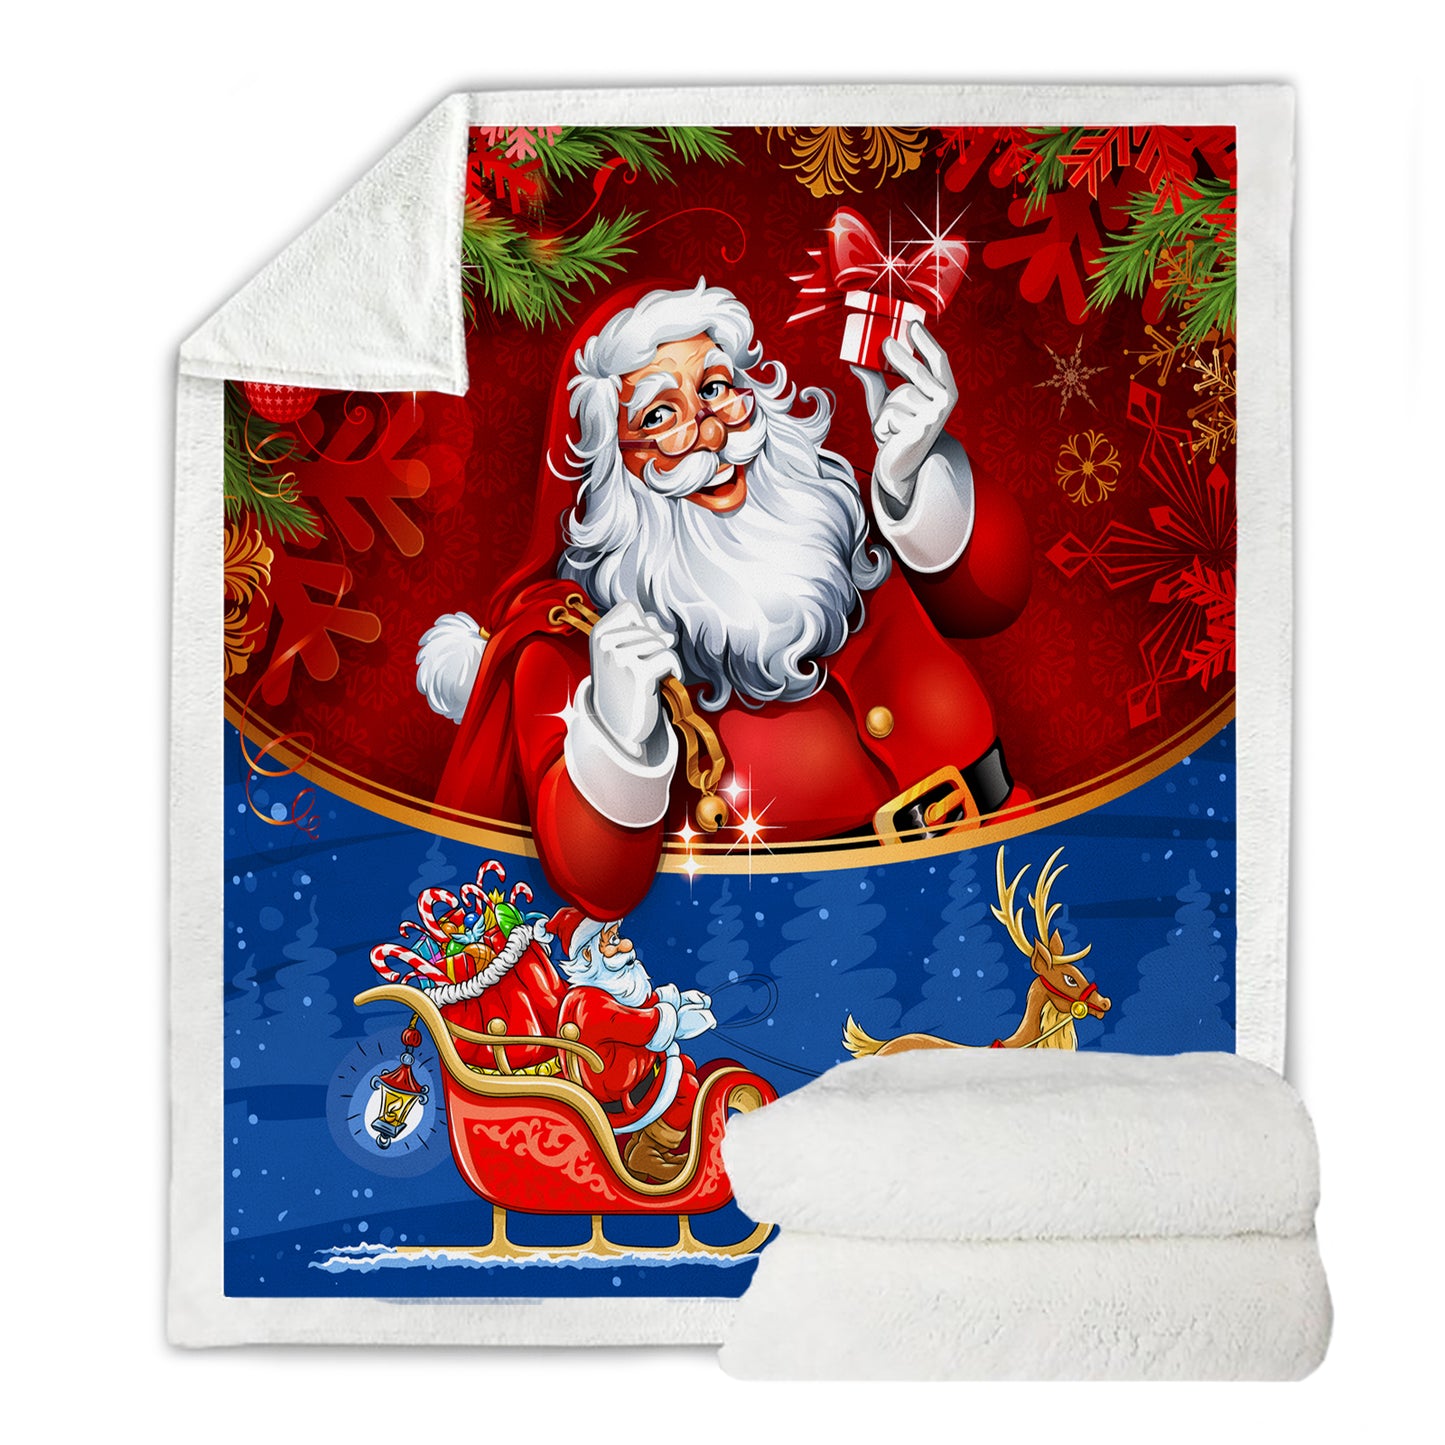 WONGS BEDDING Christmas Gift of Santa Blanket